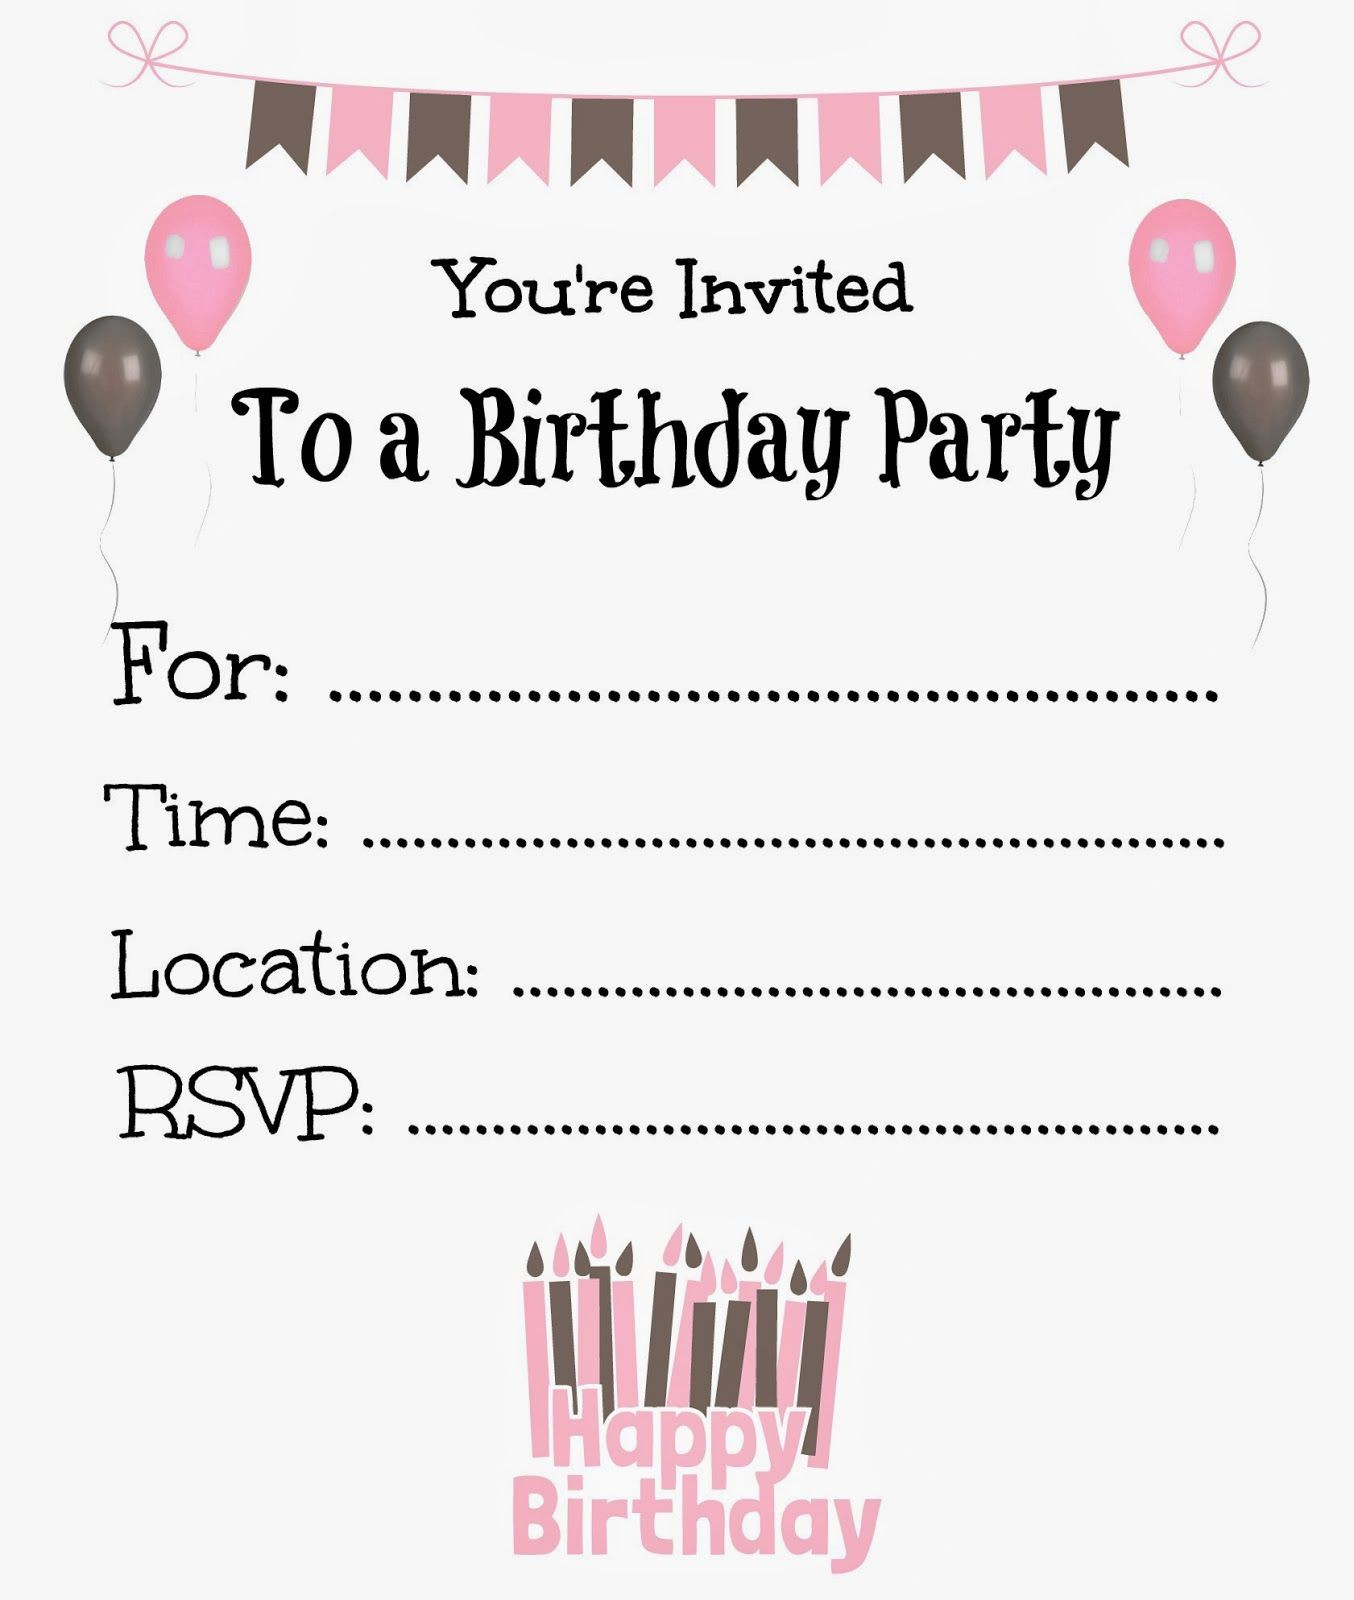 Best ideas about Birthday Invitations Free
. Save or Pin Free Printable Birthday Invitations For Kids birthday Now.